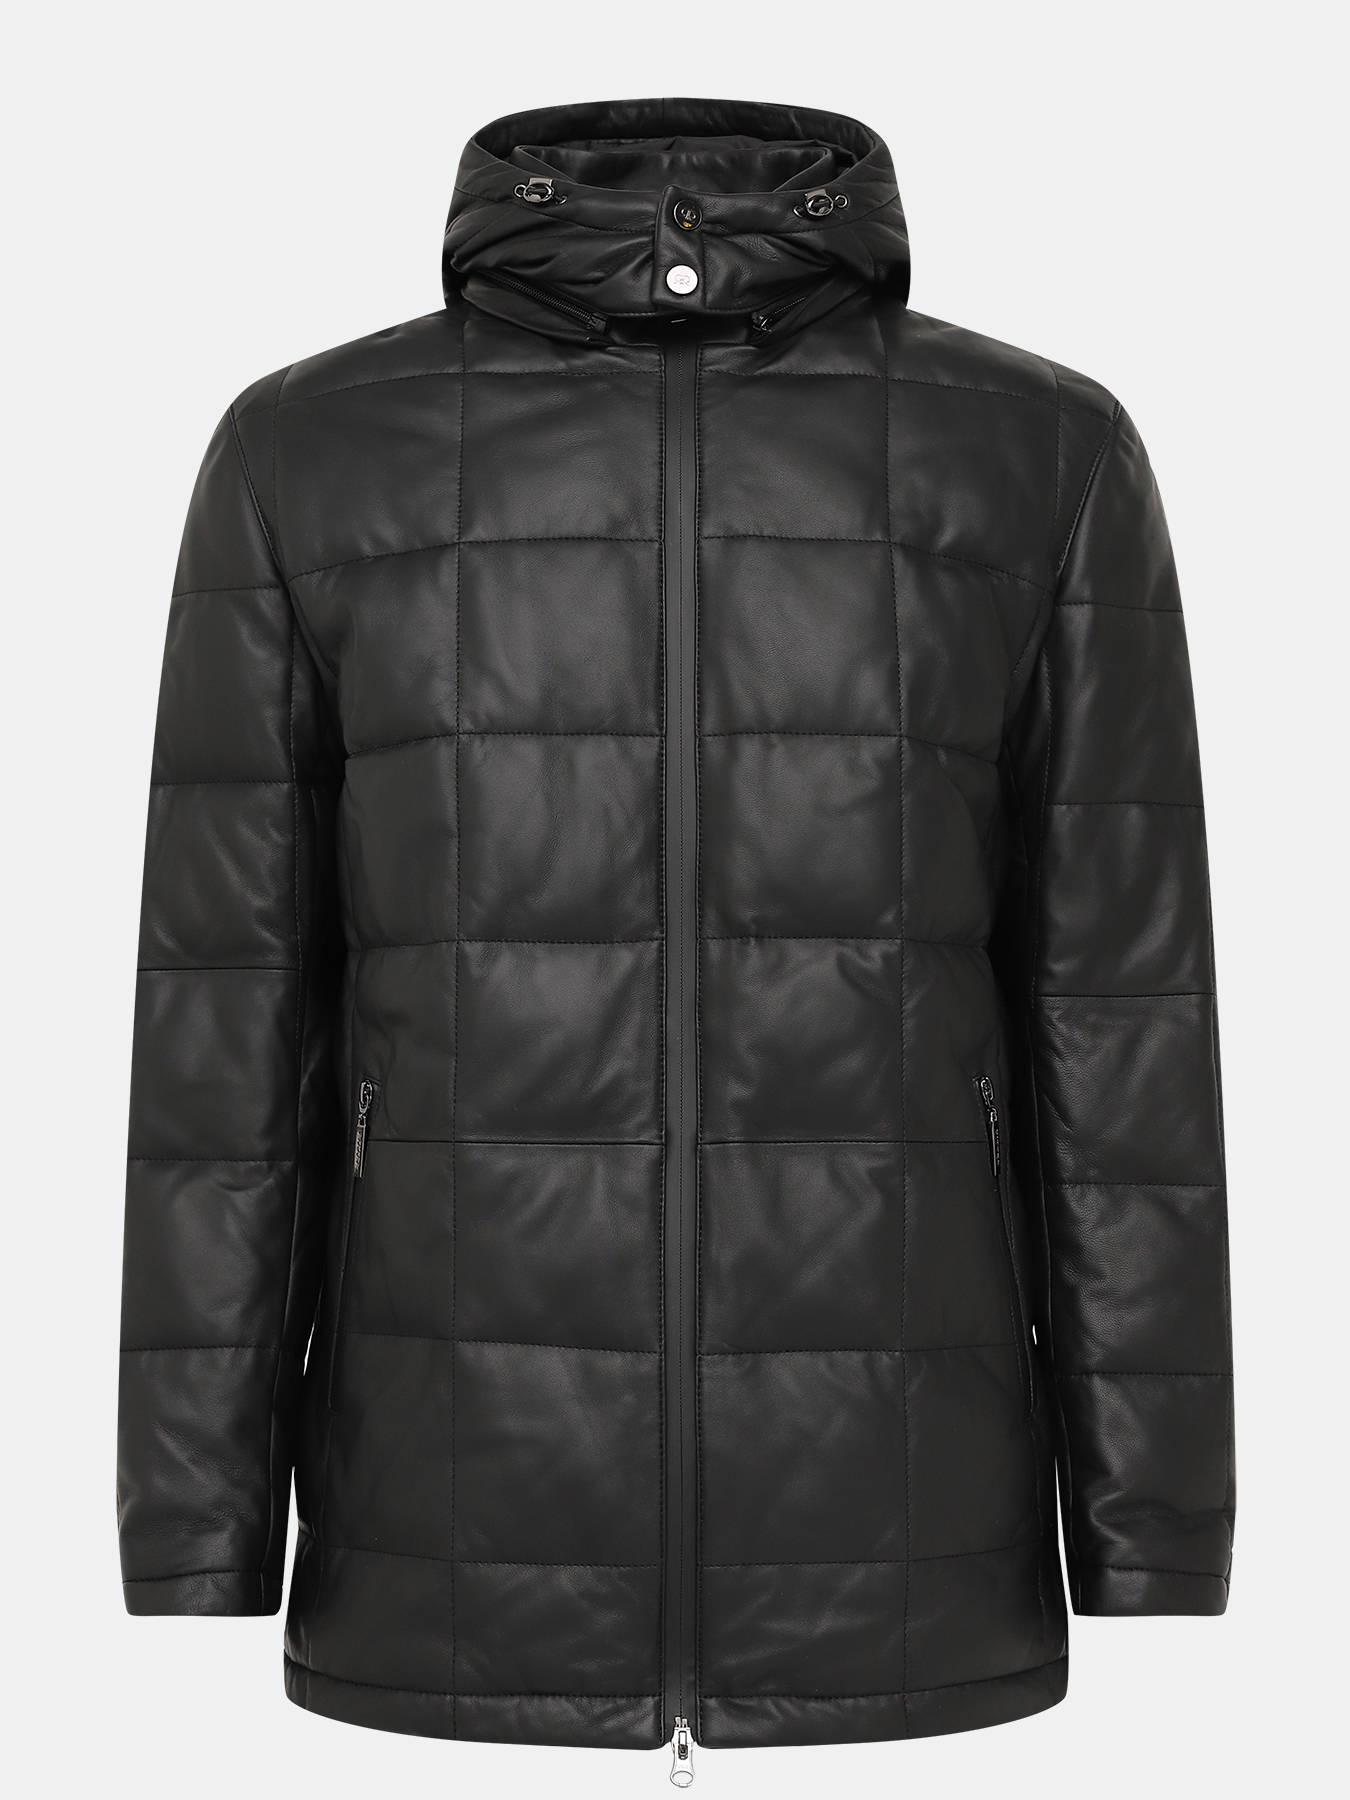 Кожаная куртка Ritter 390994-025, цвет черный, размер 48 - фото 1